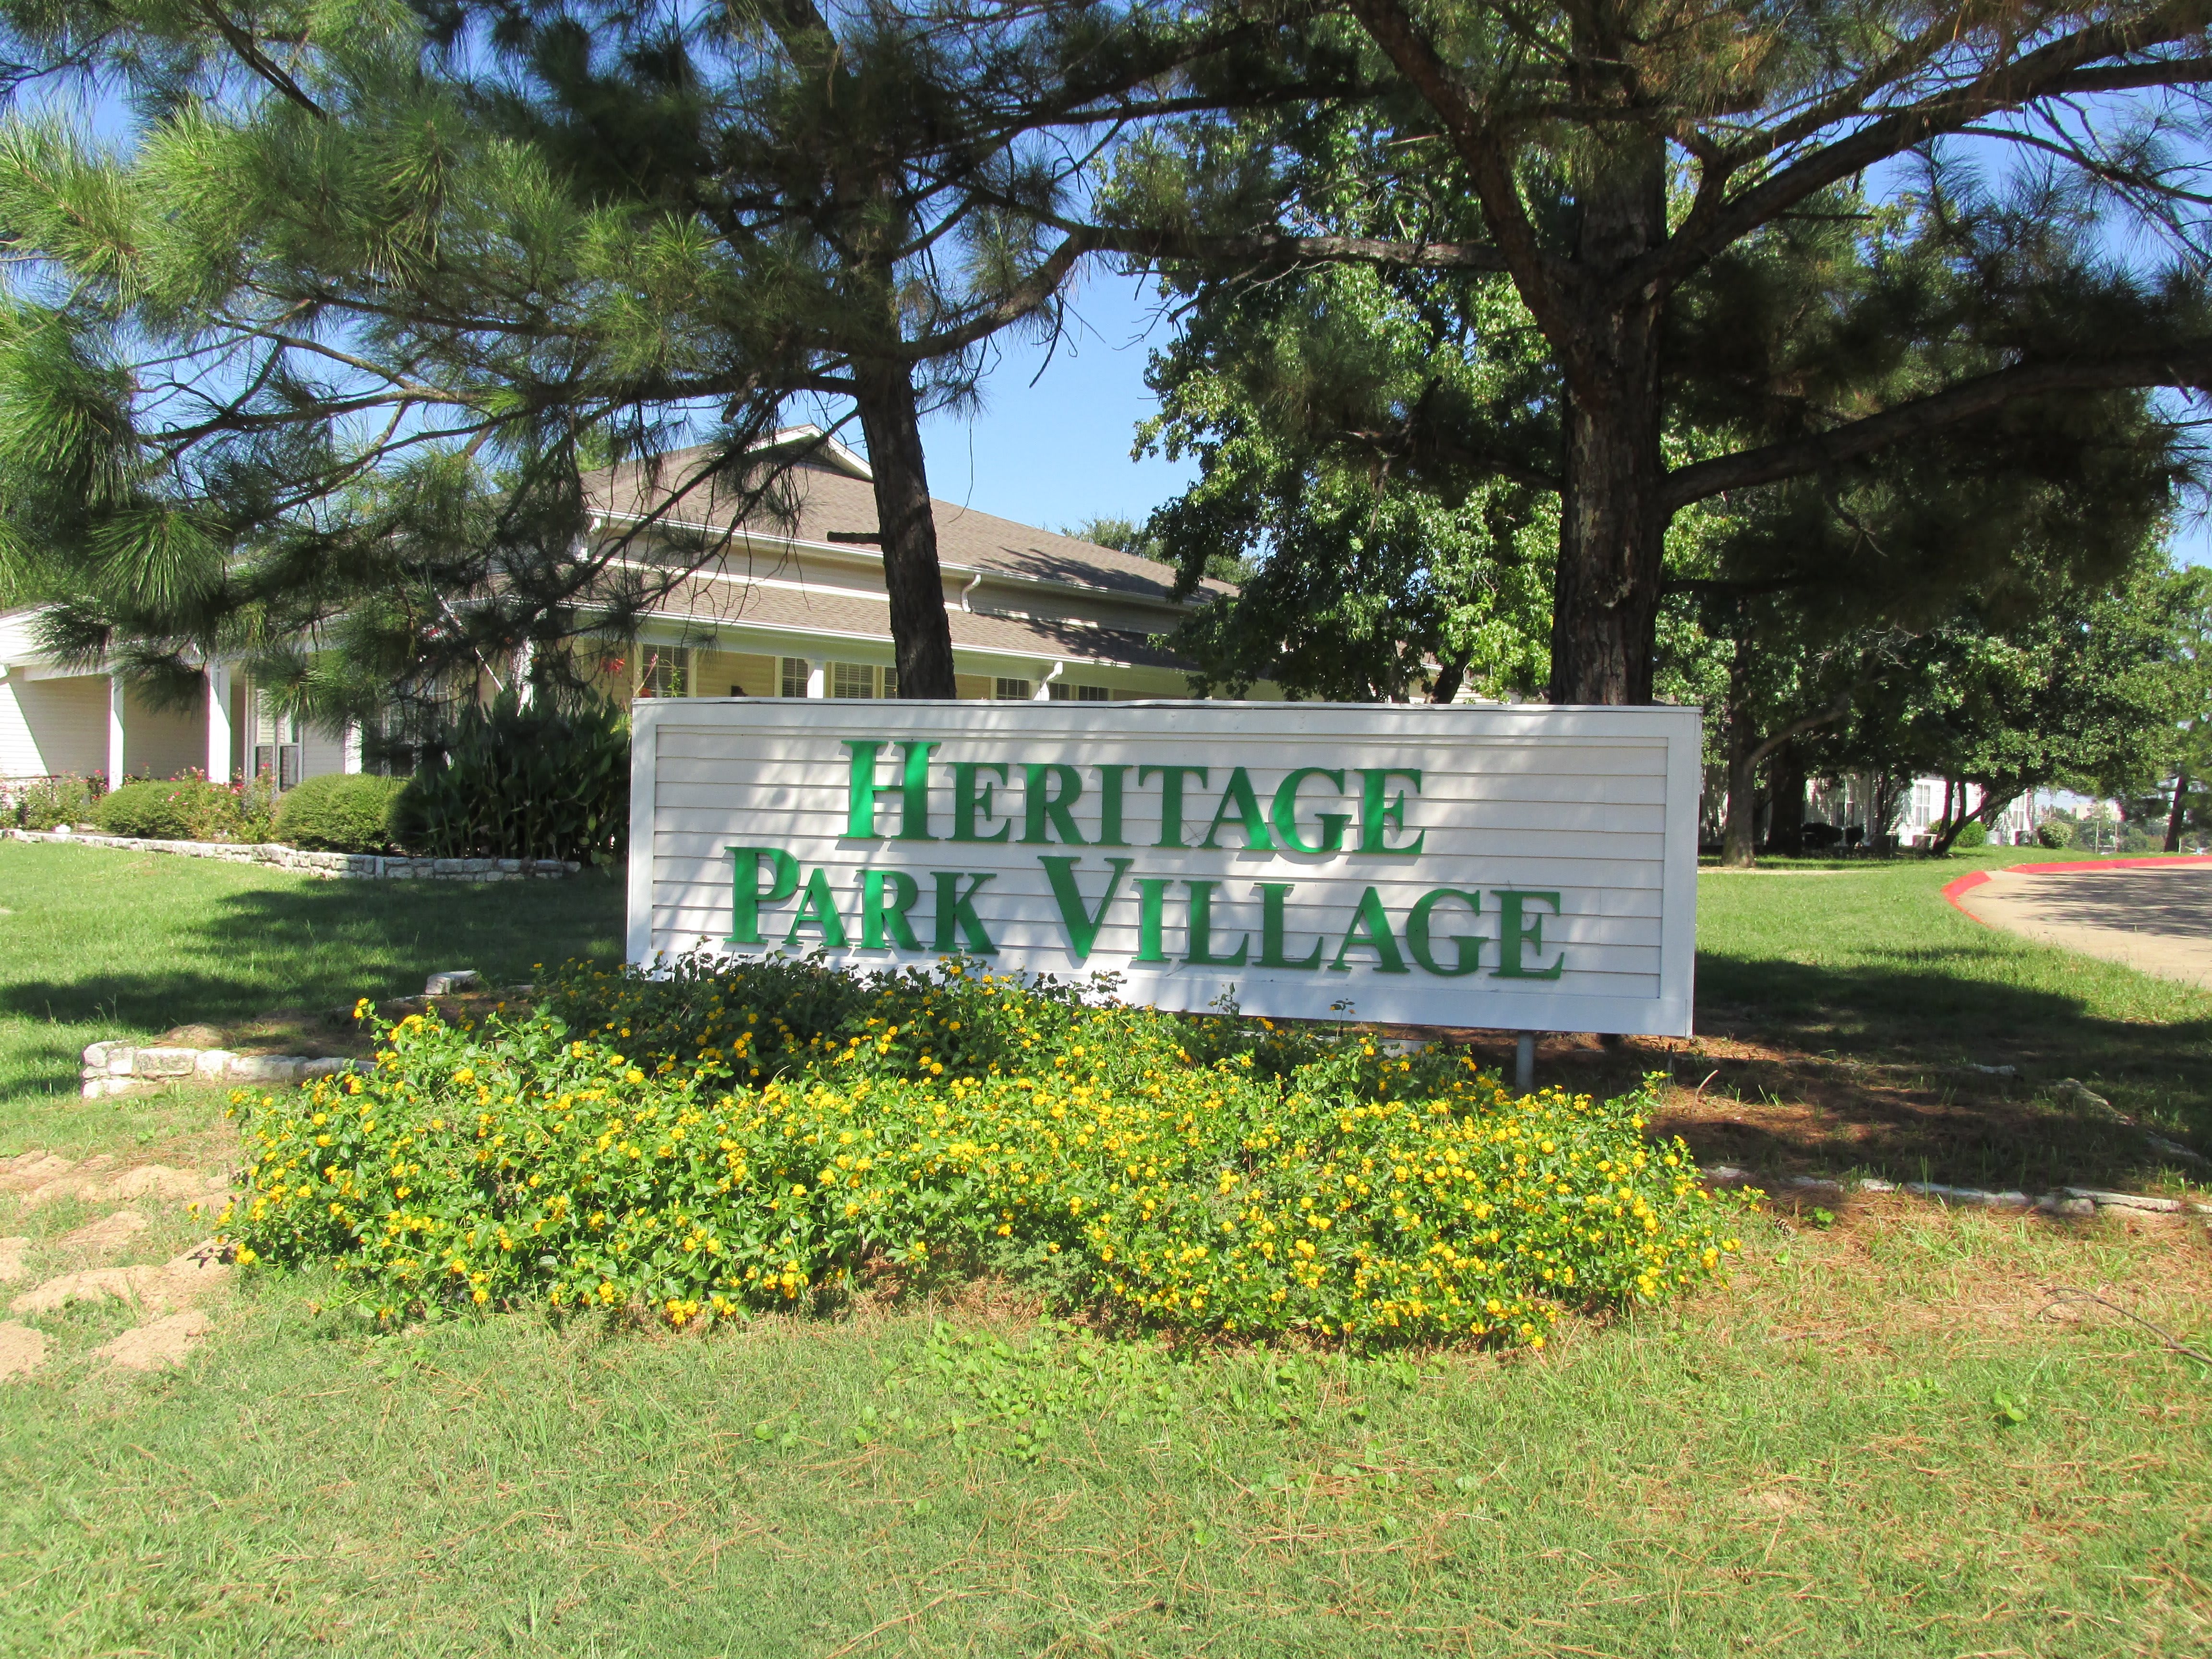 Photo of Heritage Park Village